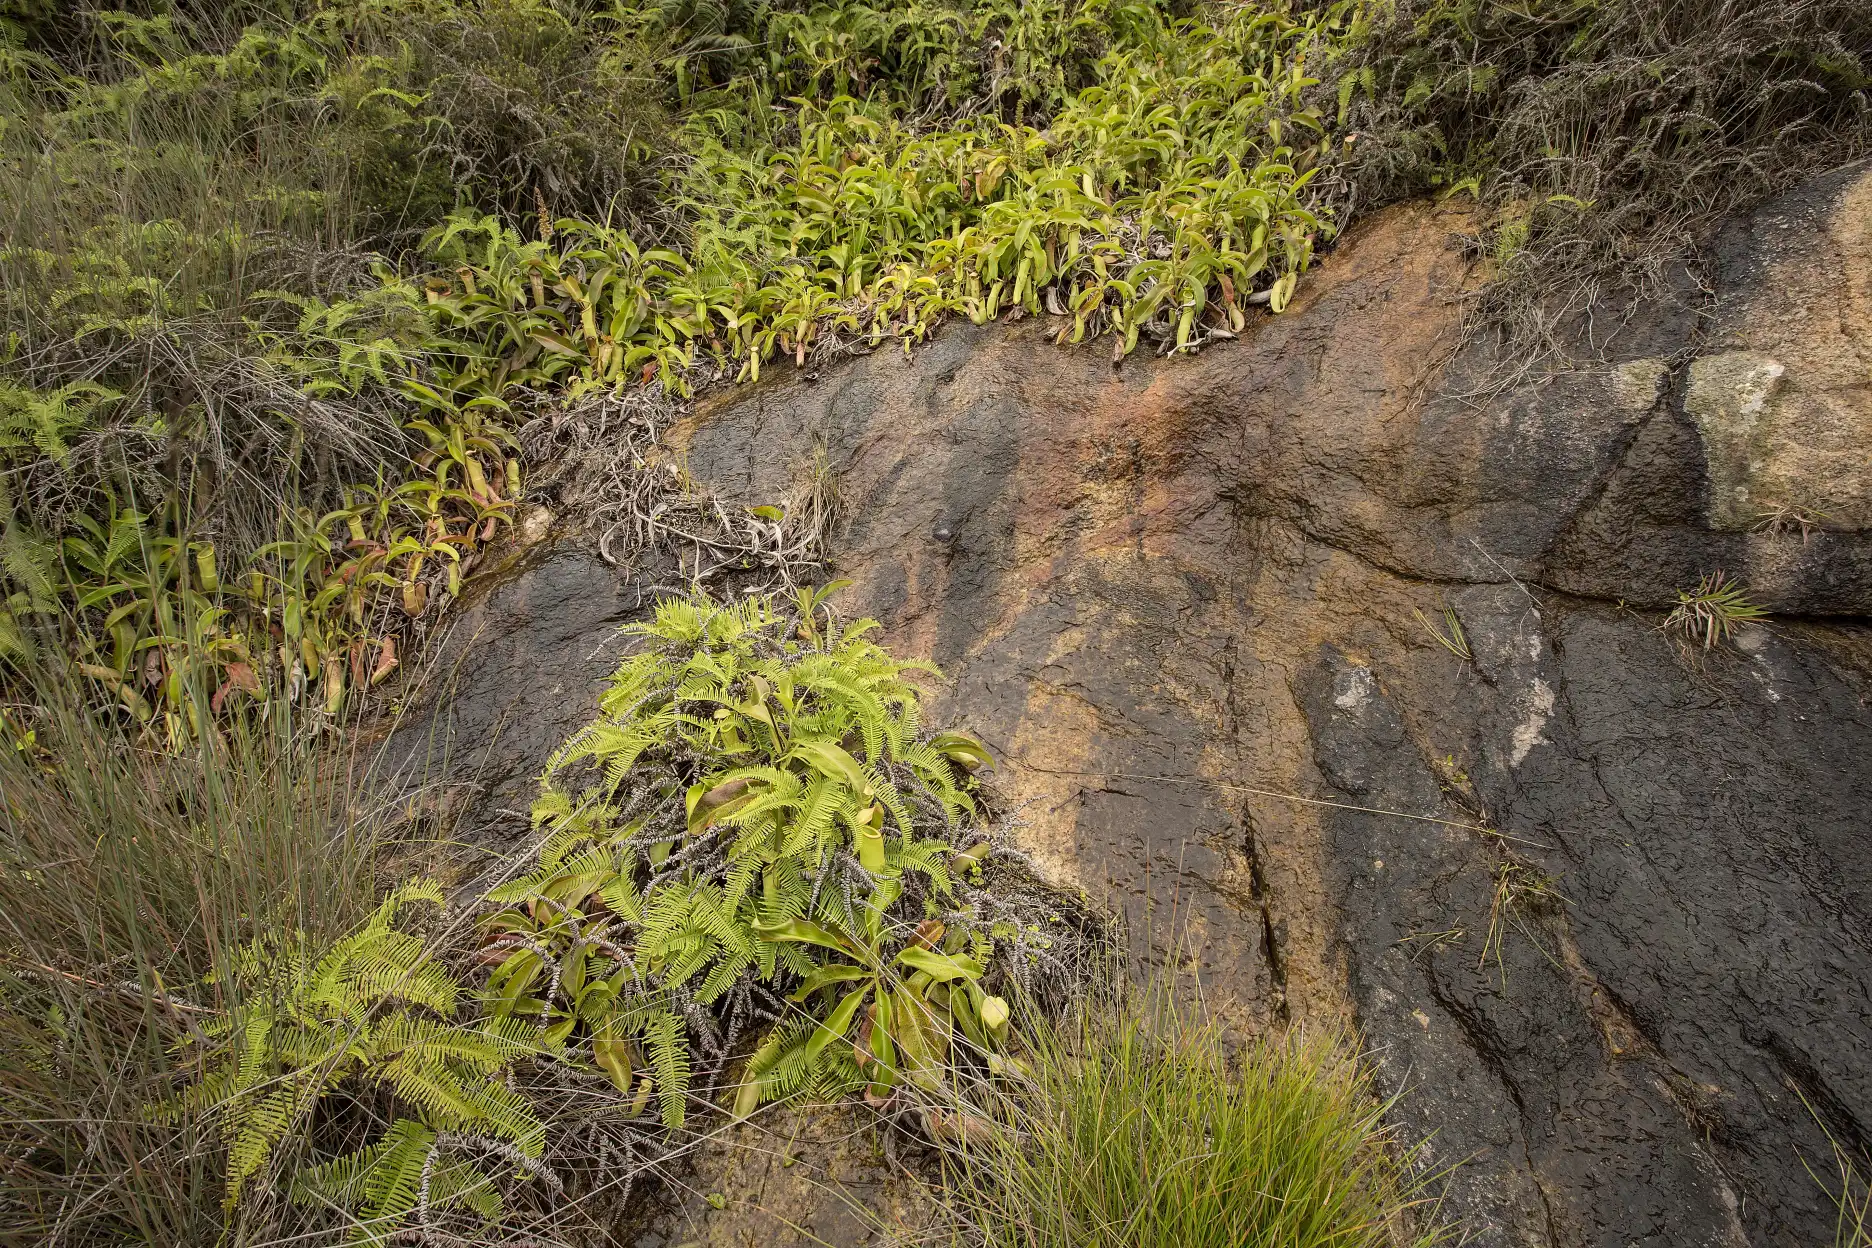 Nepenthes mirabilis grow on a hillside near Hac Sa in Coloane, Macau, China. 